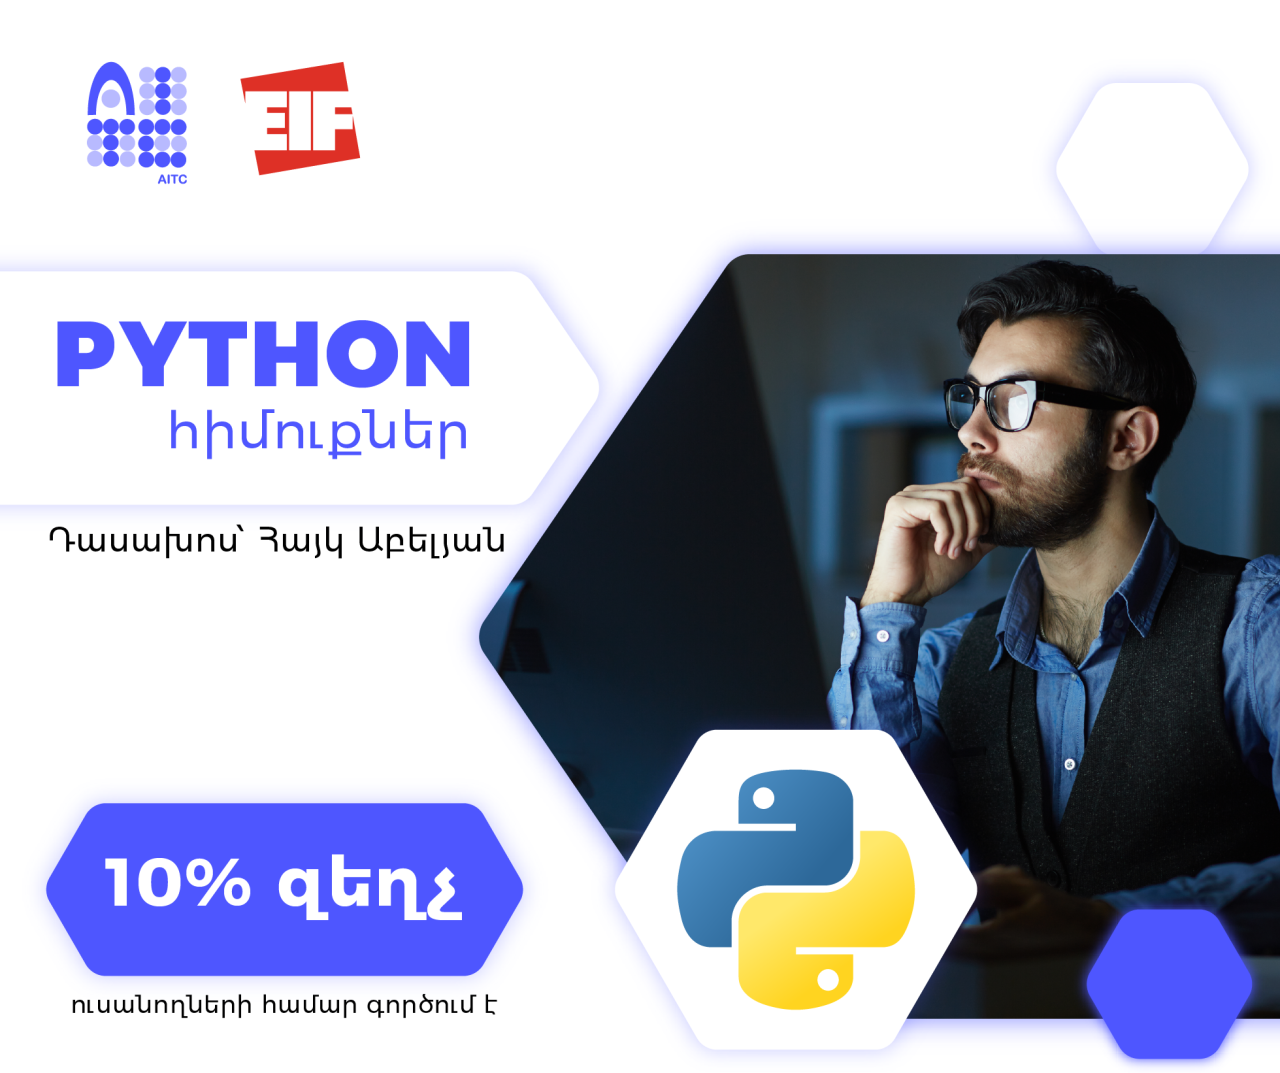 AITC/EIF կենտրոնը Python հիմունքներ դասընթացին ընդառաջ տեղեկատվական հանդիպում կանցկացնի